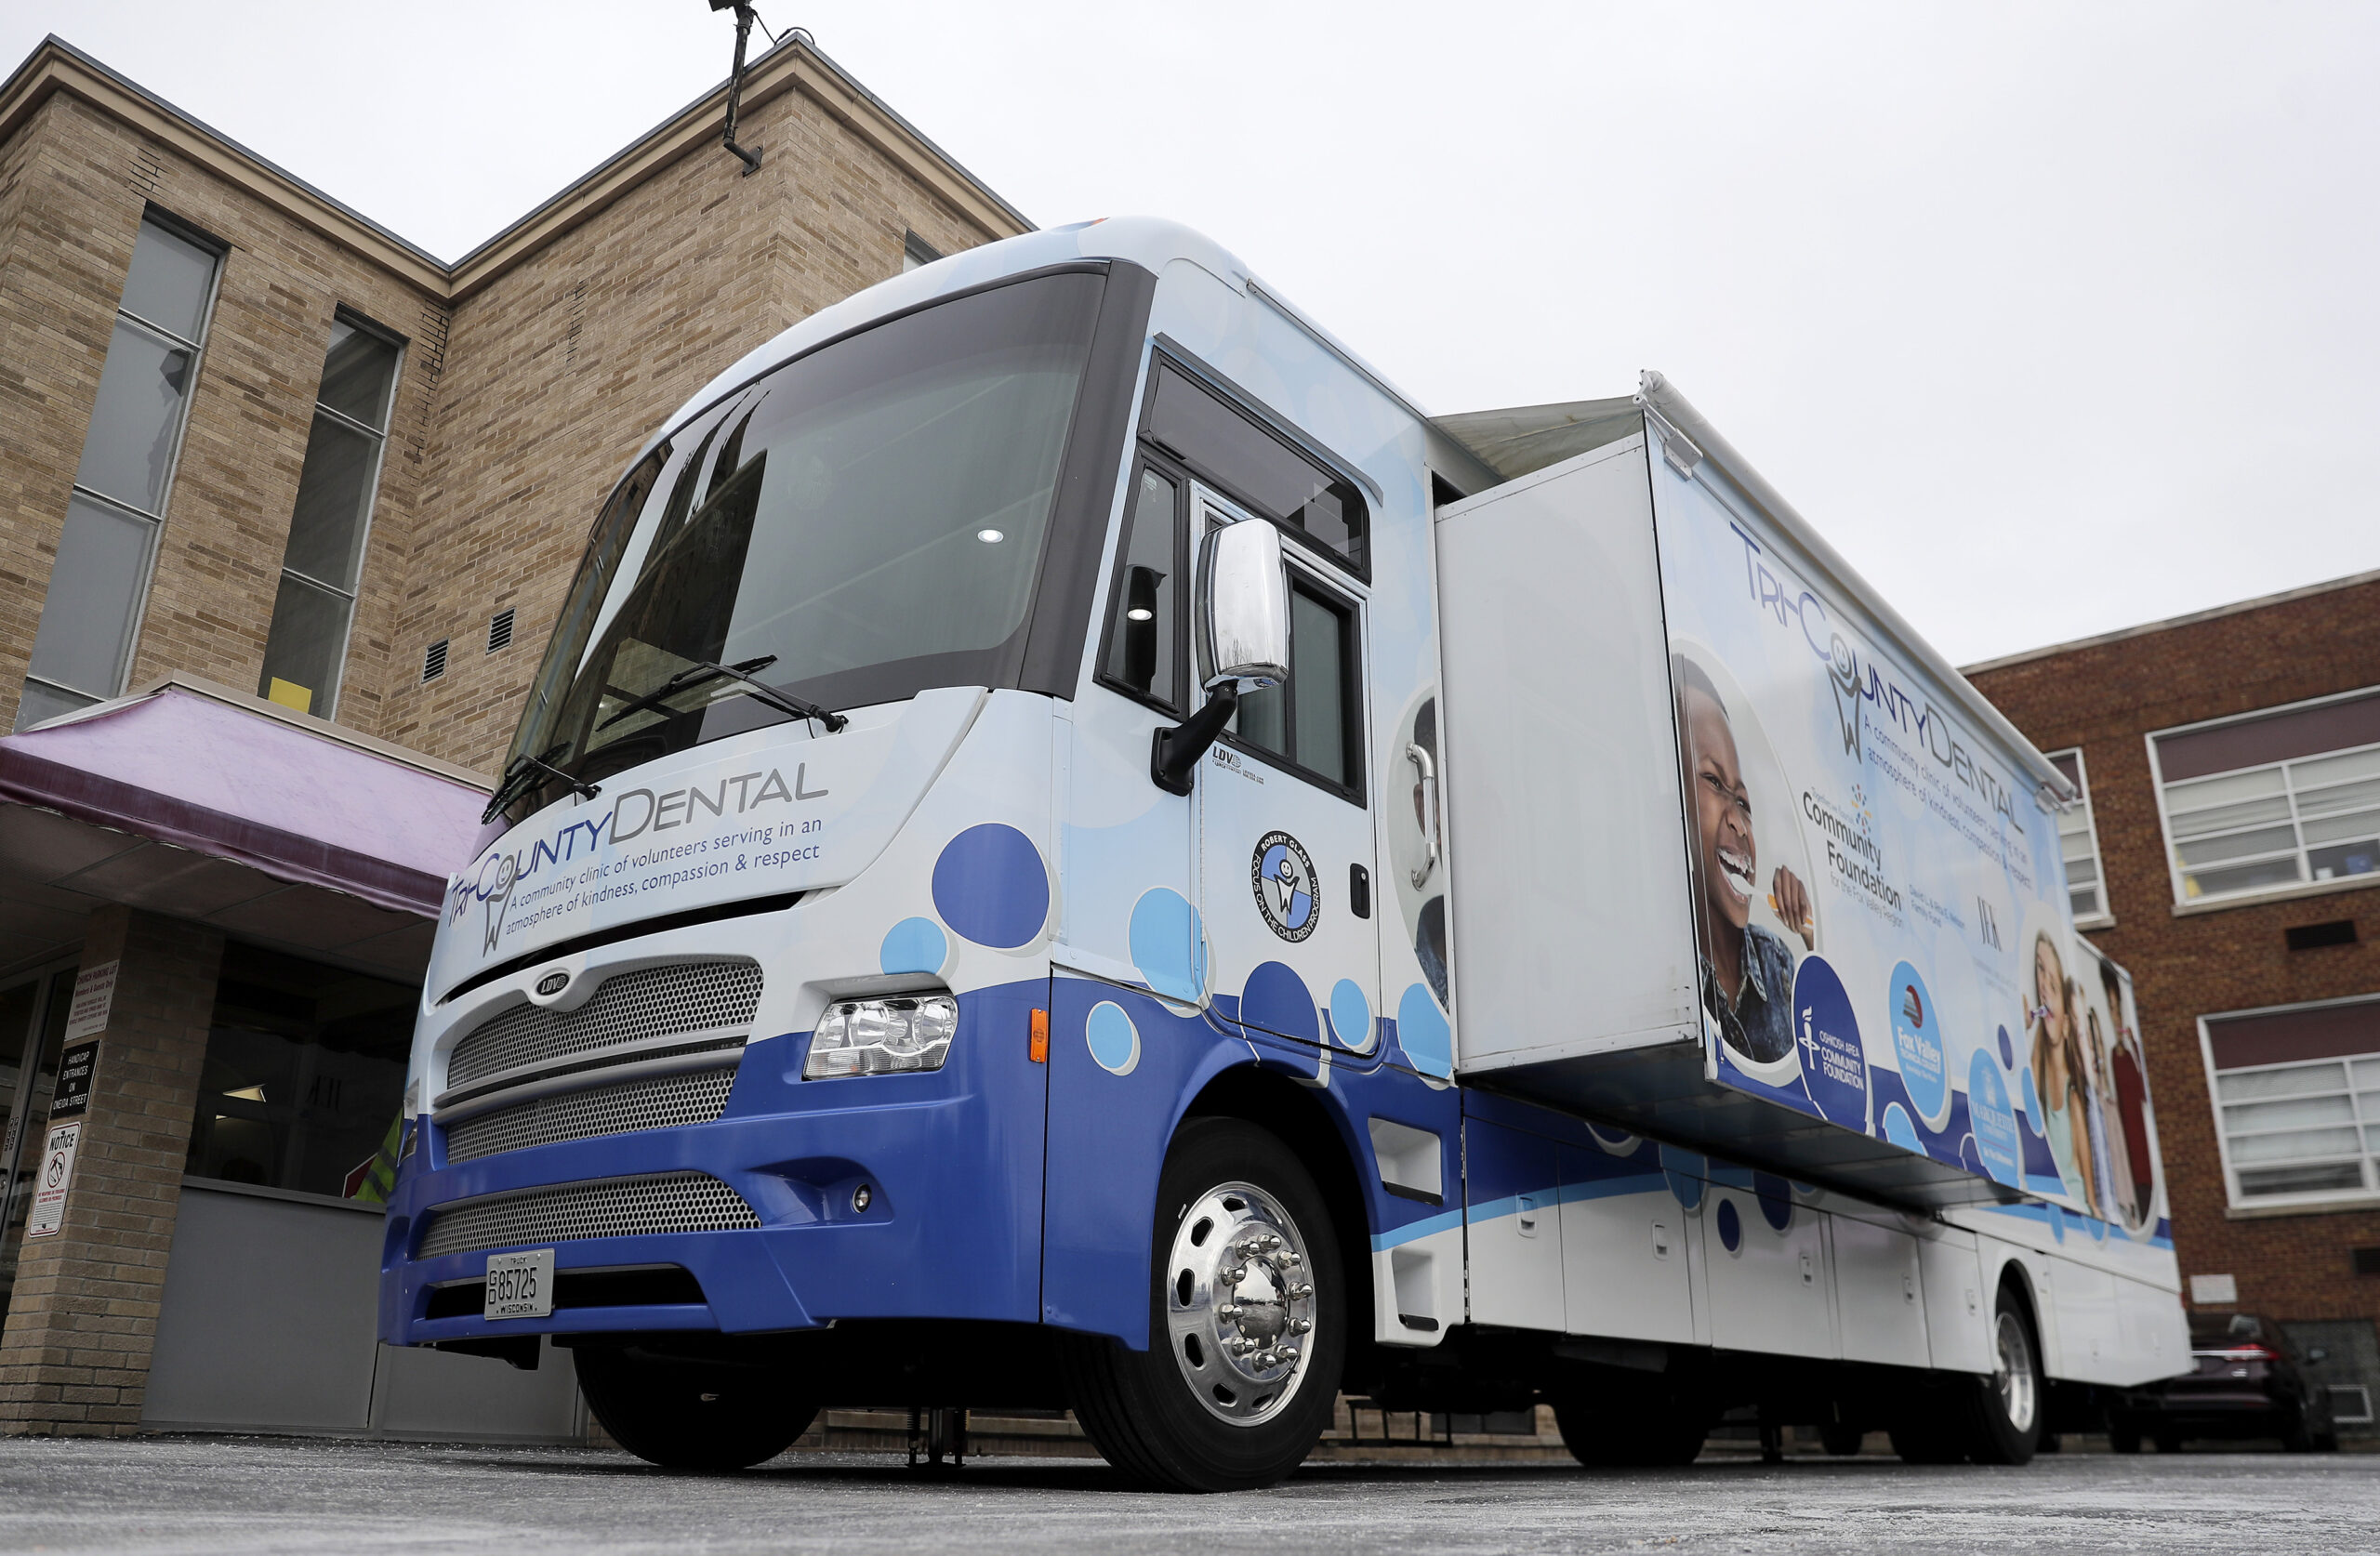 Tri-County Dental mobile clinic, part of the Robert Glass Focus on the Children program